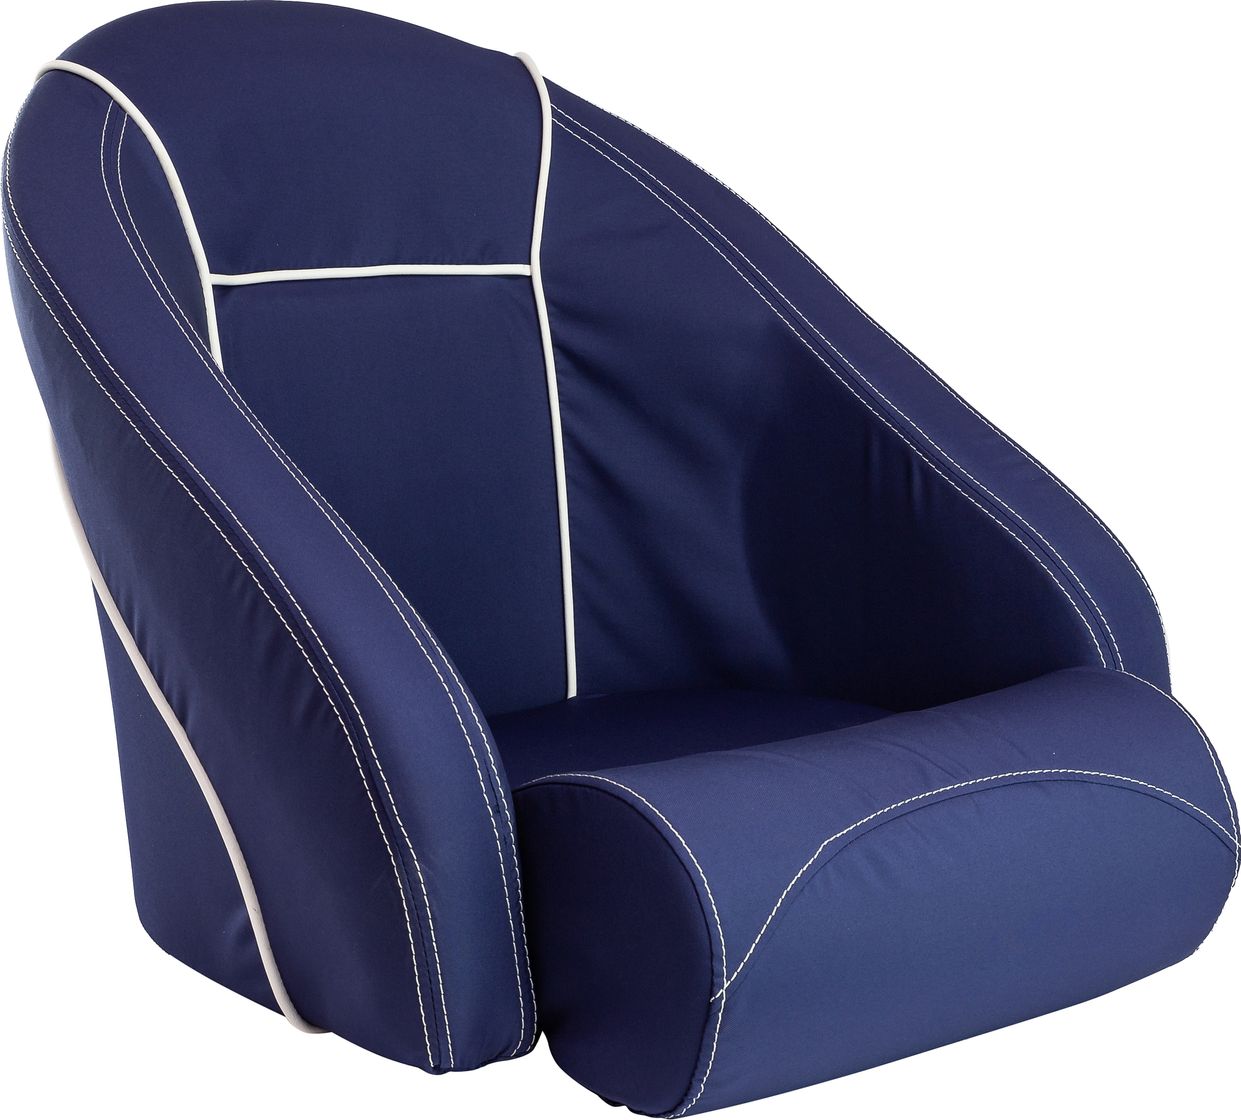 Кресло ROMEO мягкое, подставка, обивка ткань Markilux темно-синяя 118100395 кресло admiral мягкое материал винил 1061420990